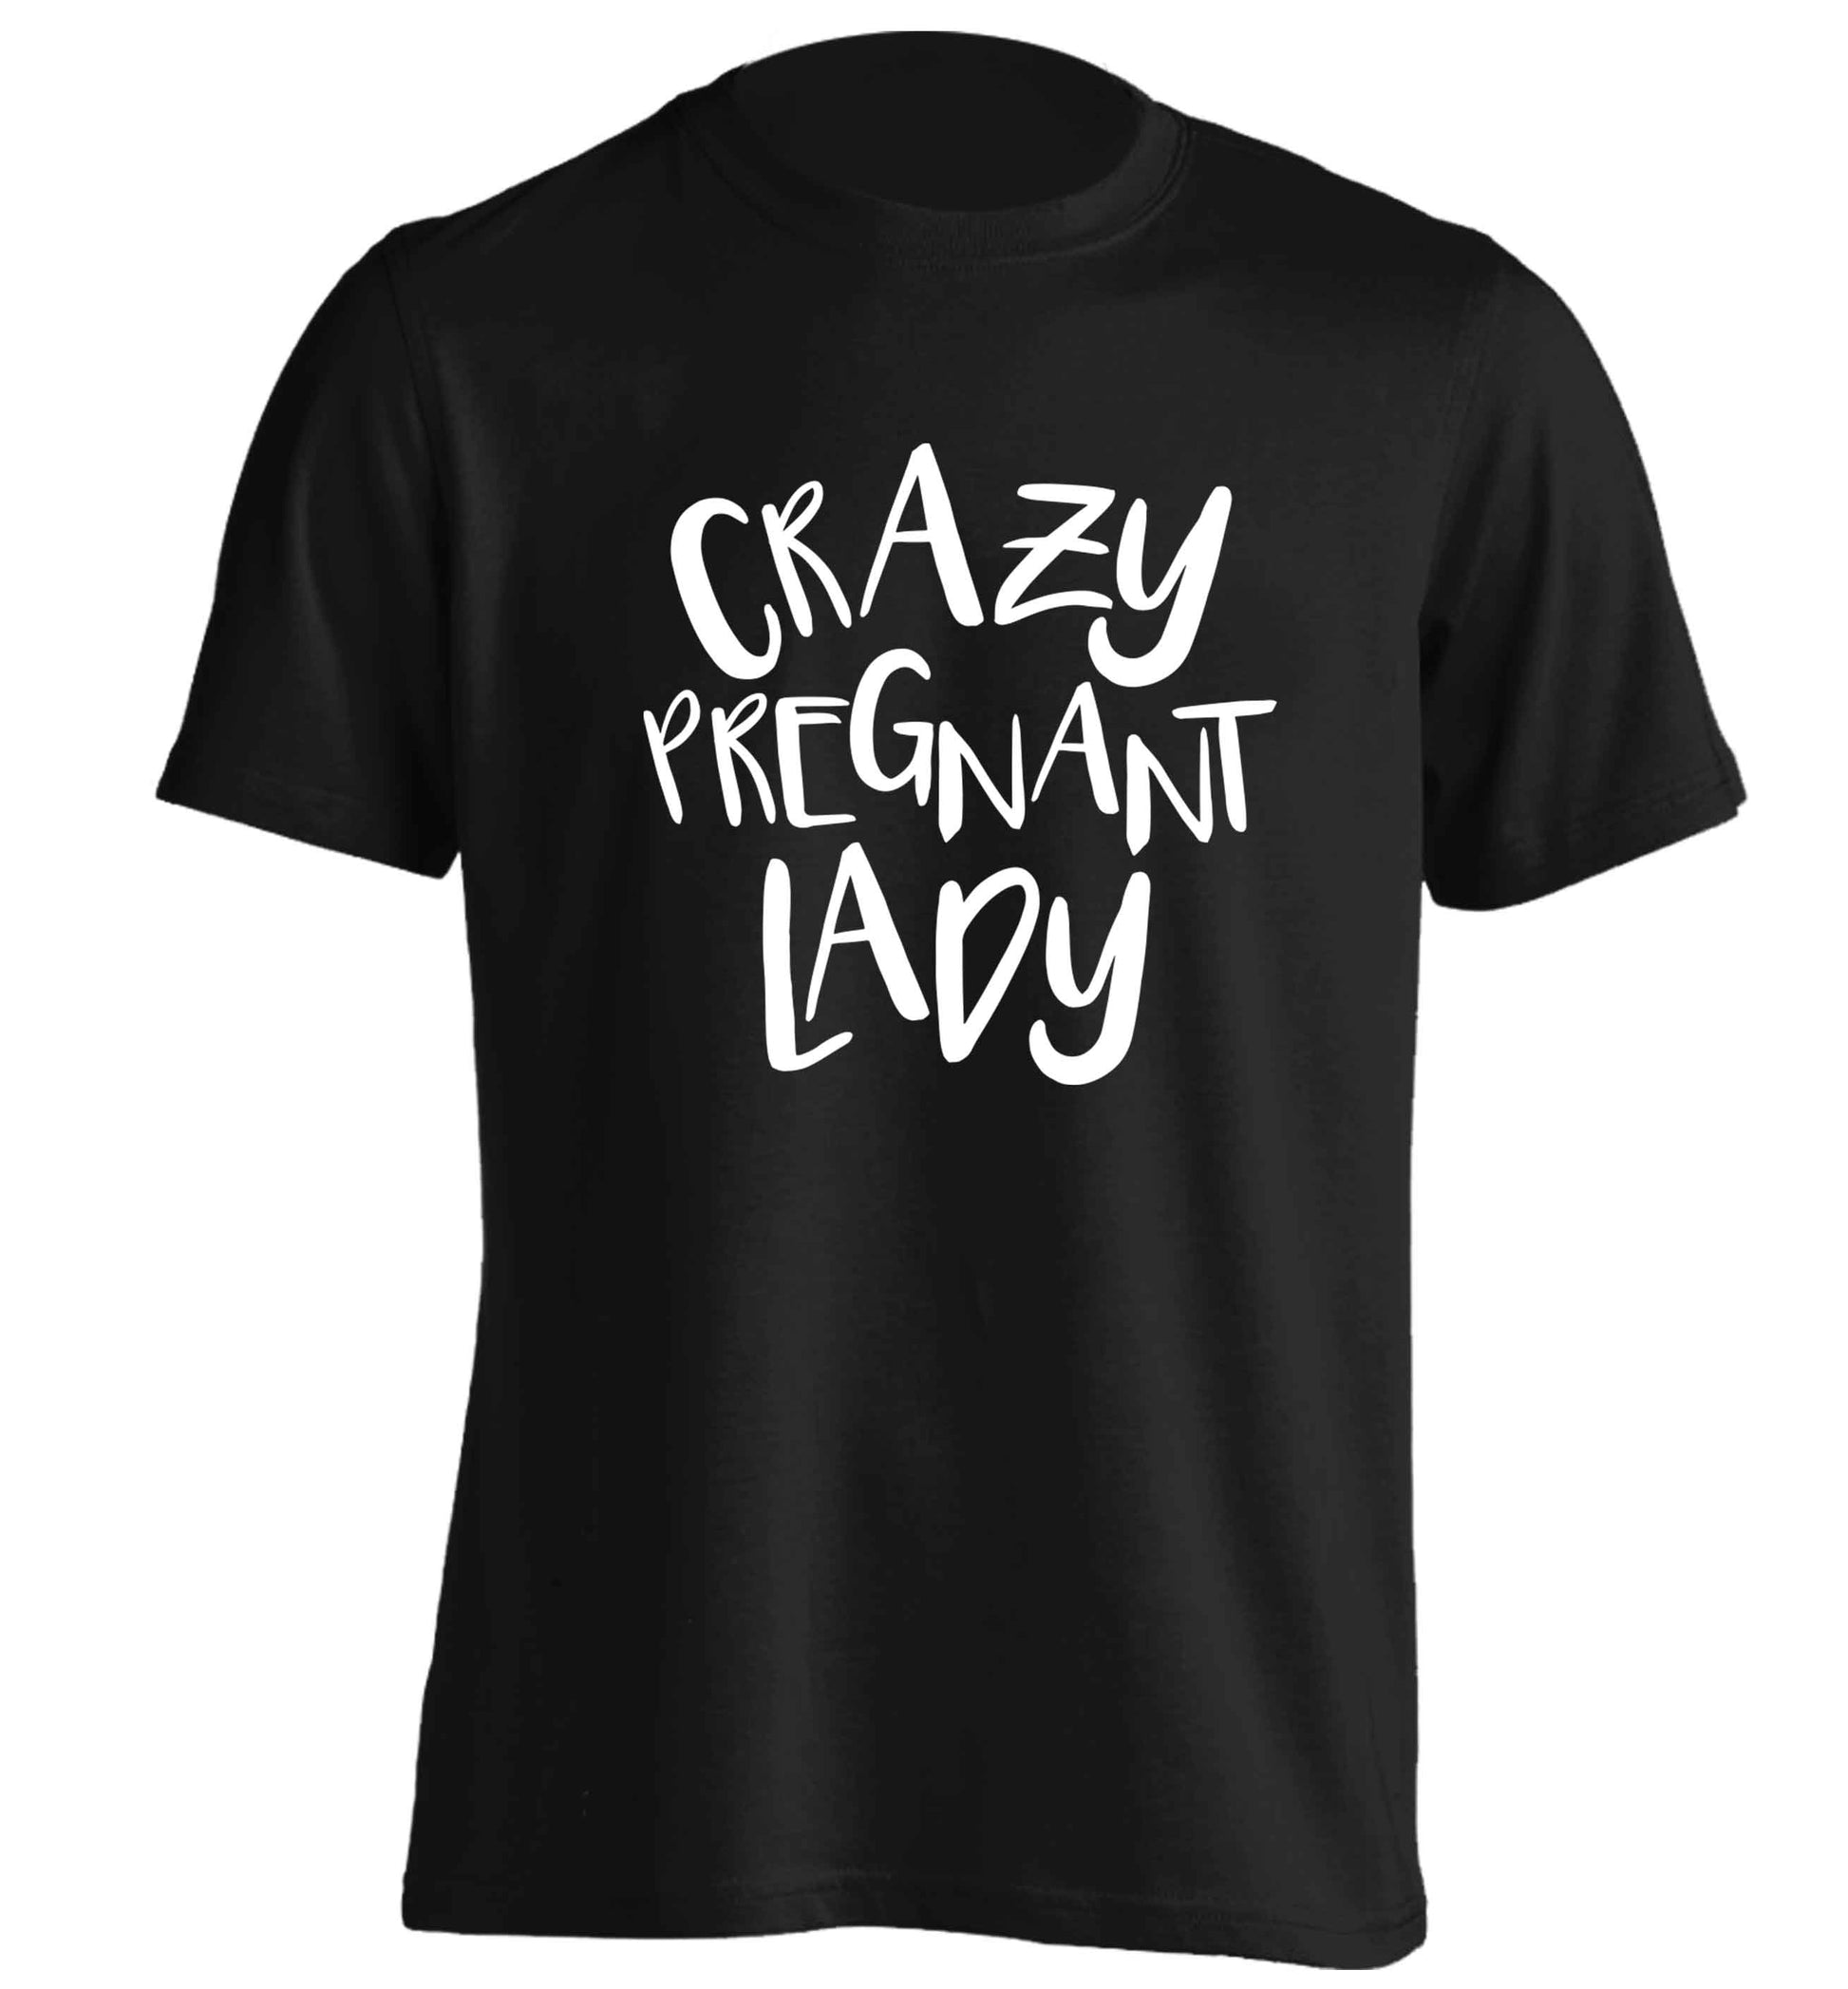 Crazy pregnant lady adults unisex black Tshirt 2XL